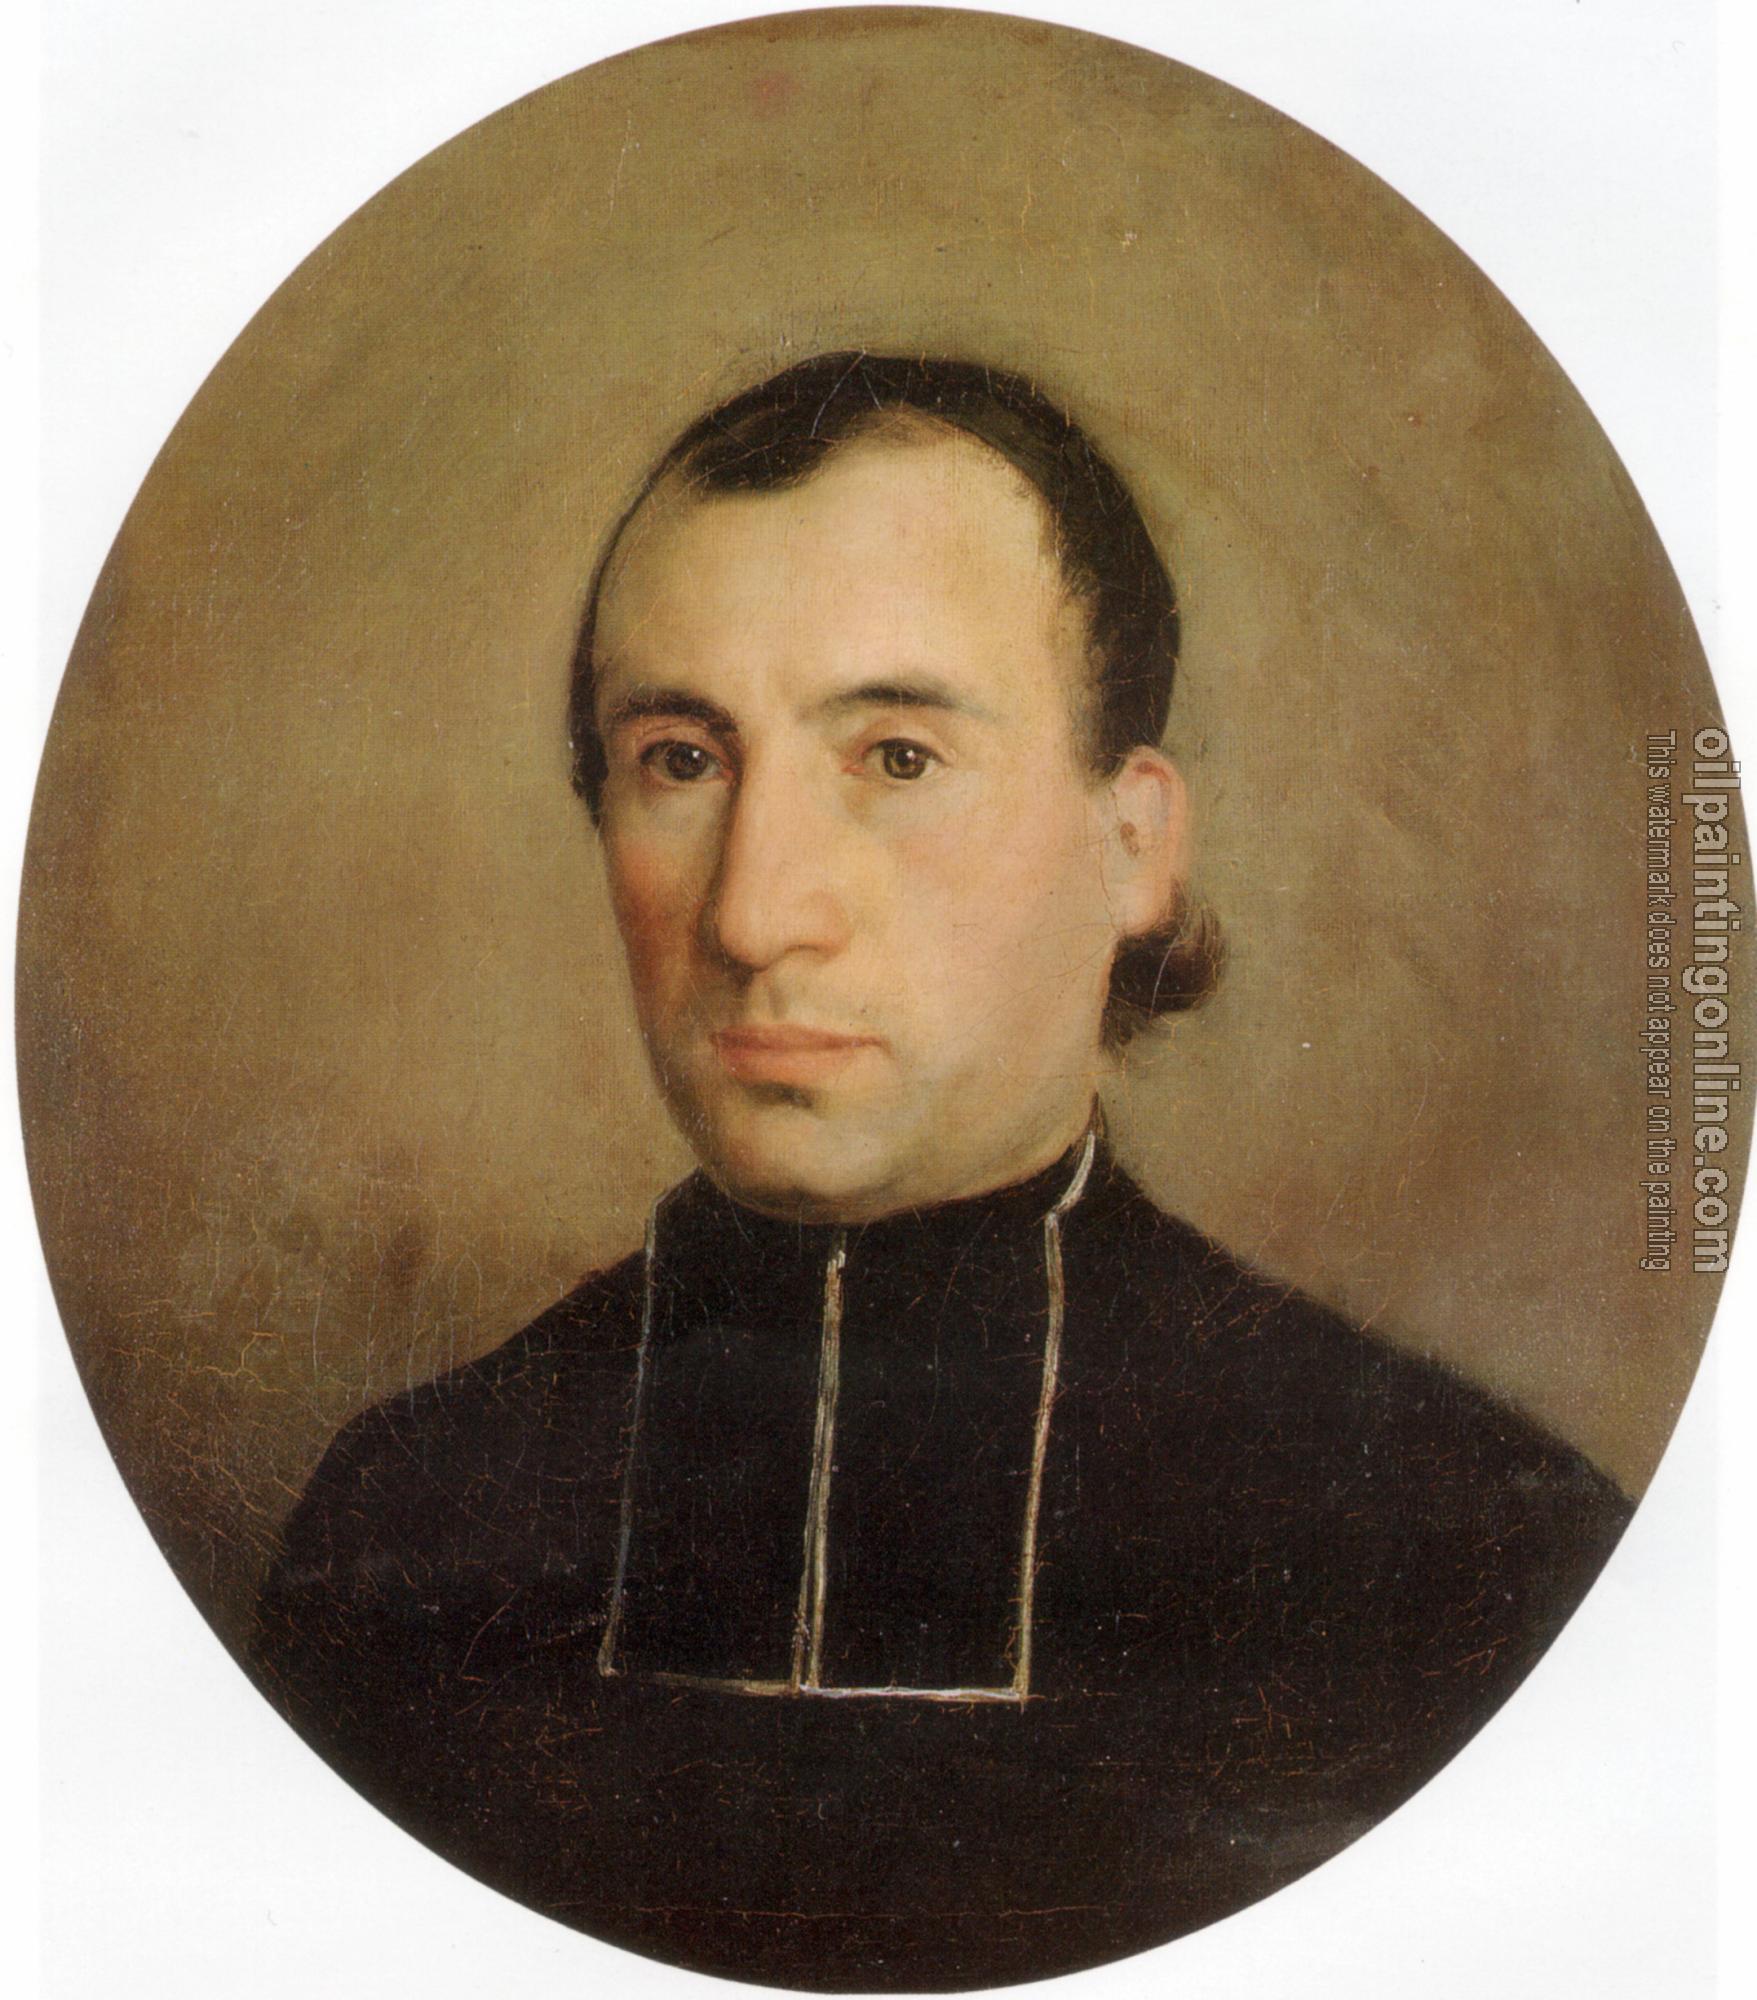 Bouguereau, William-Adolphe - A Portrait of Eugene Bouguereau